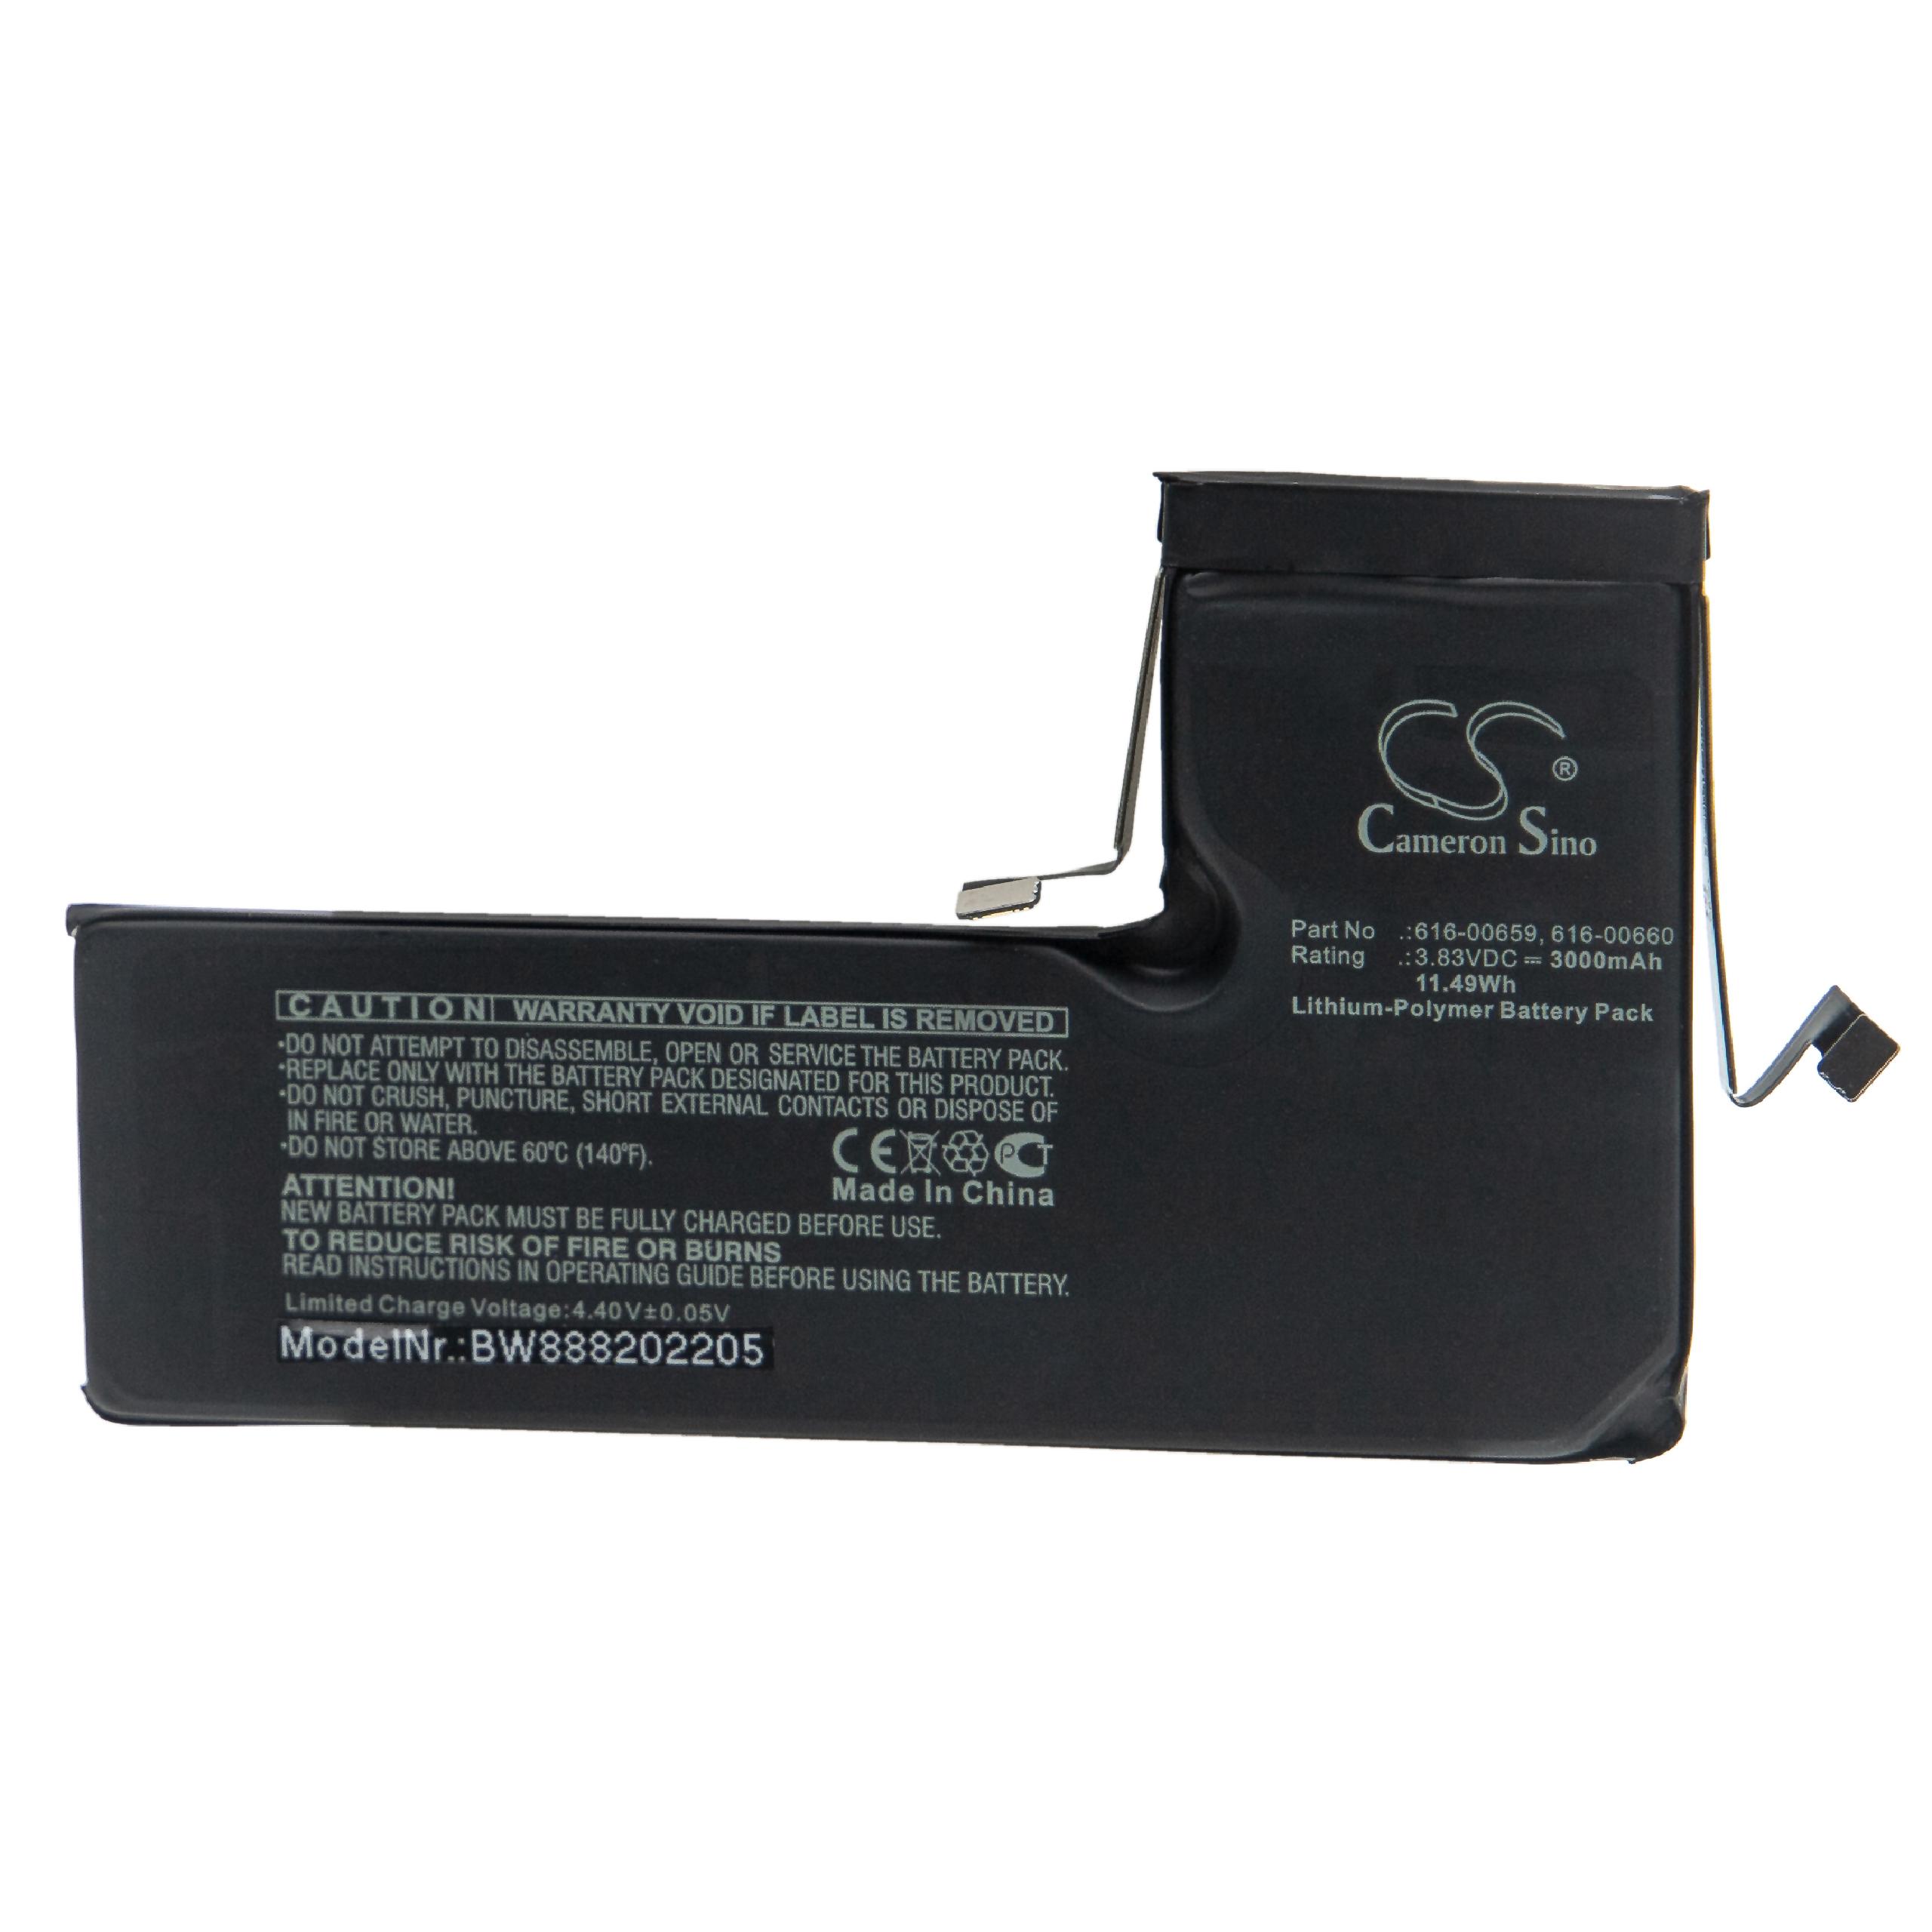 Akumulator bateria do telefonu smartfona zam. Apple 616-00659, 616-00660 - 3000mAh, 3,83V, LiPo